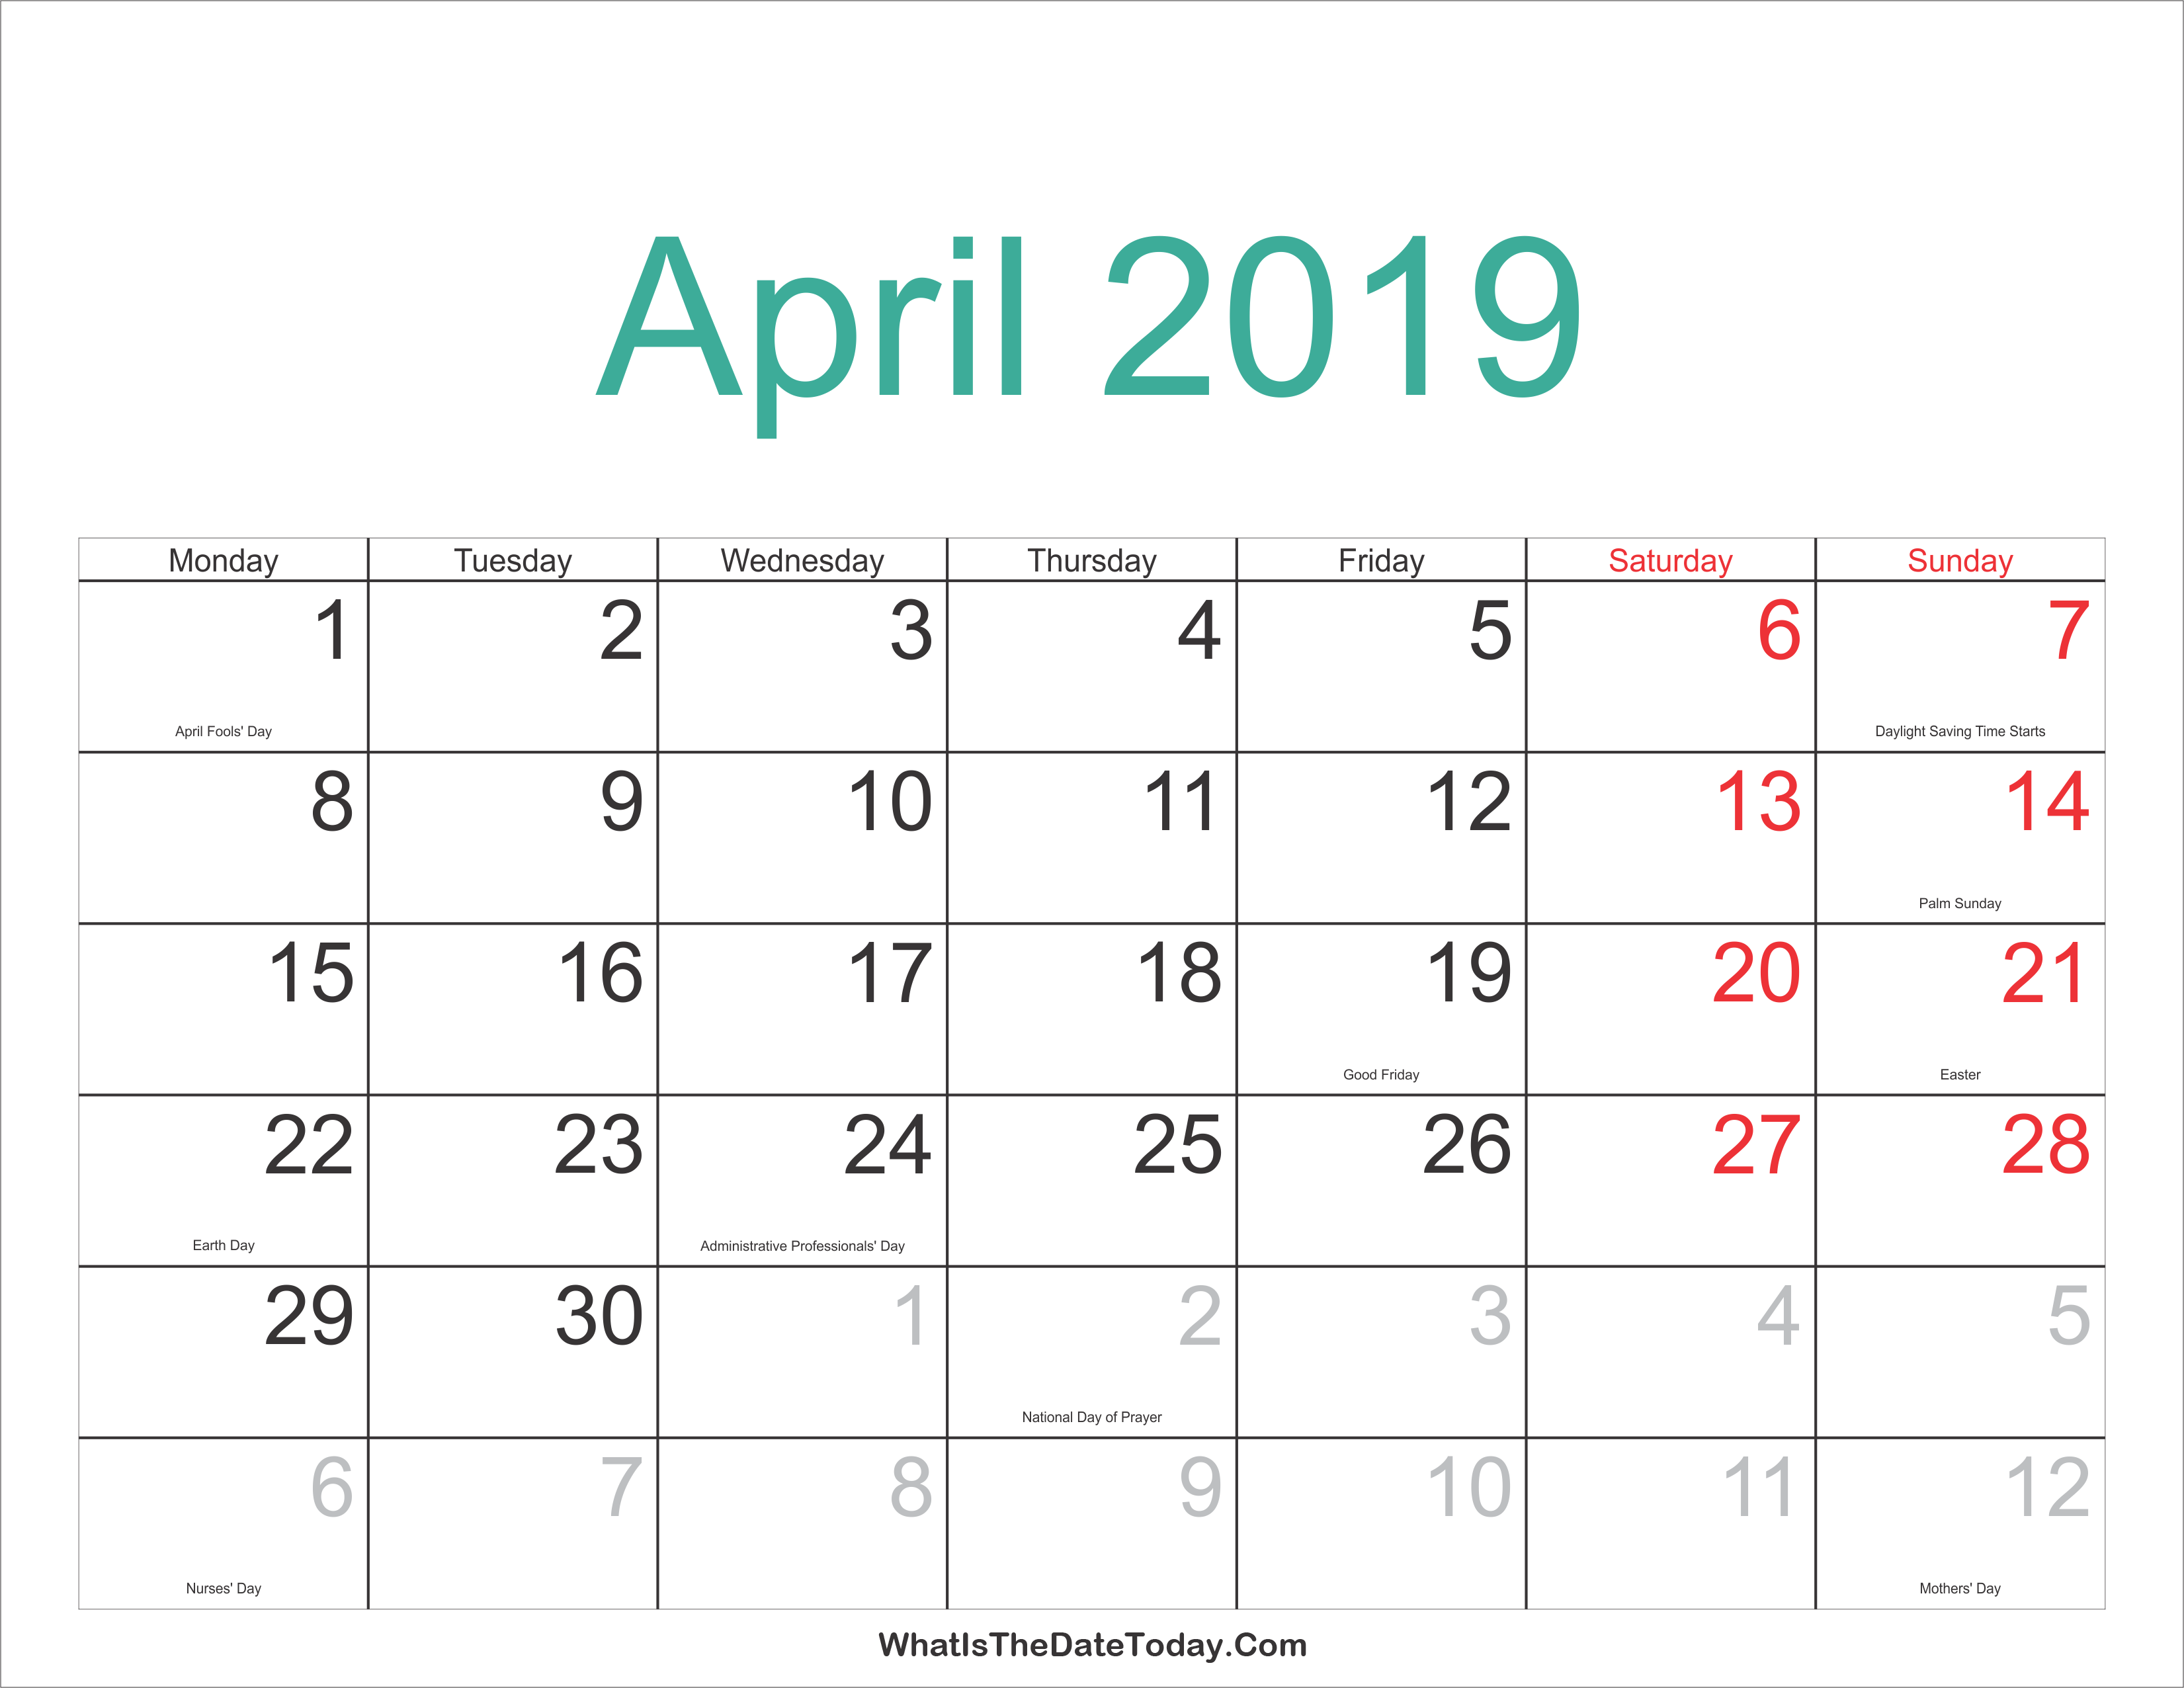 april-2019-calendar-printable-with-holidays-whatisthedatetoday-com